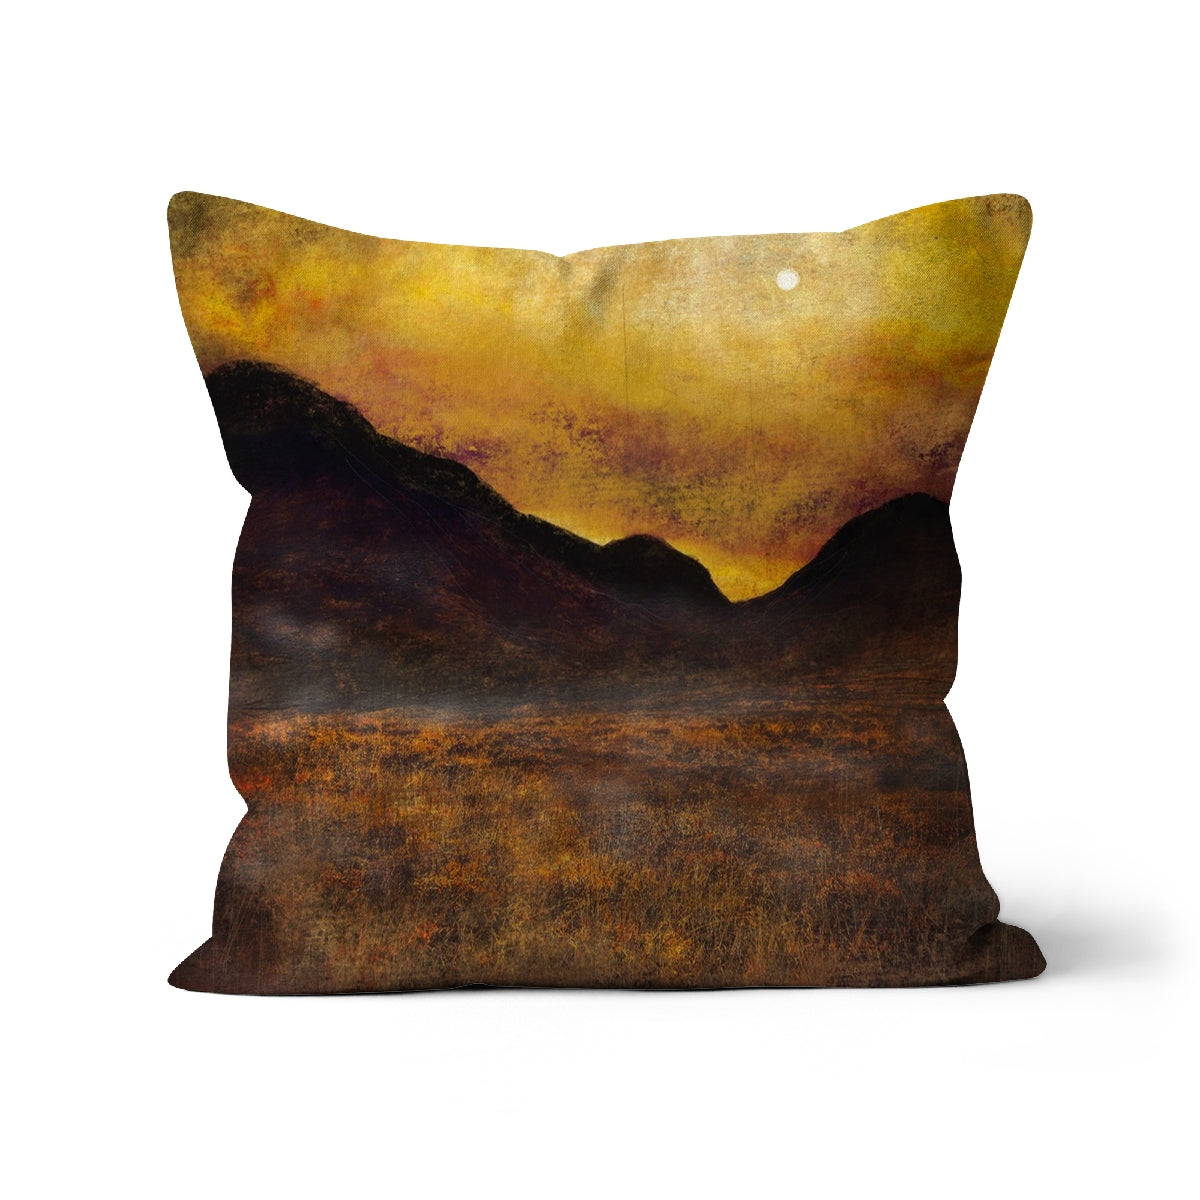 Glencoe Moonlight Art Gifts Cushion-Cushions-Glencoe Art Gallery-Linen-22"x22"-Paintings, Prints, Homeware, Art Gifts From Scotland By Scottish Artist Kevin Hunter